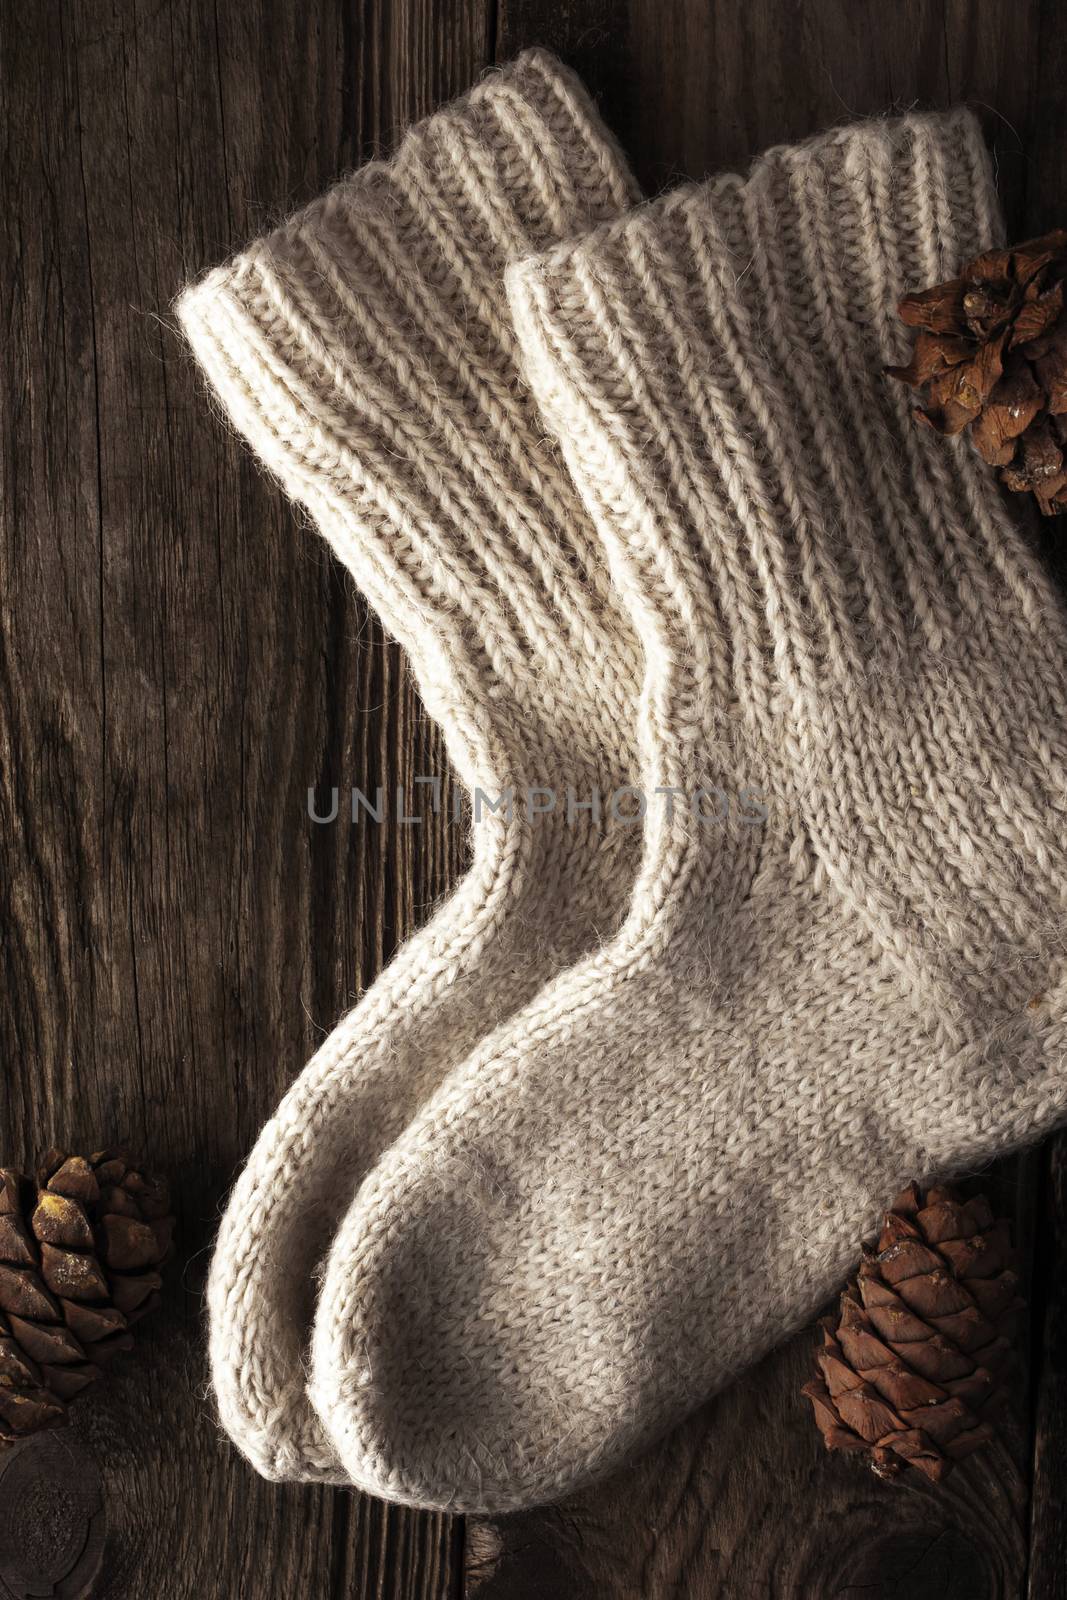 Knitted wool socks with cone by Deniskarpenkov